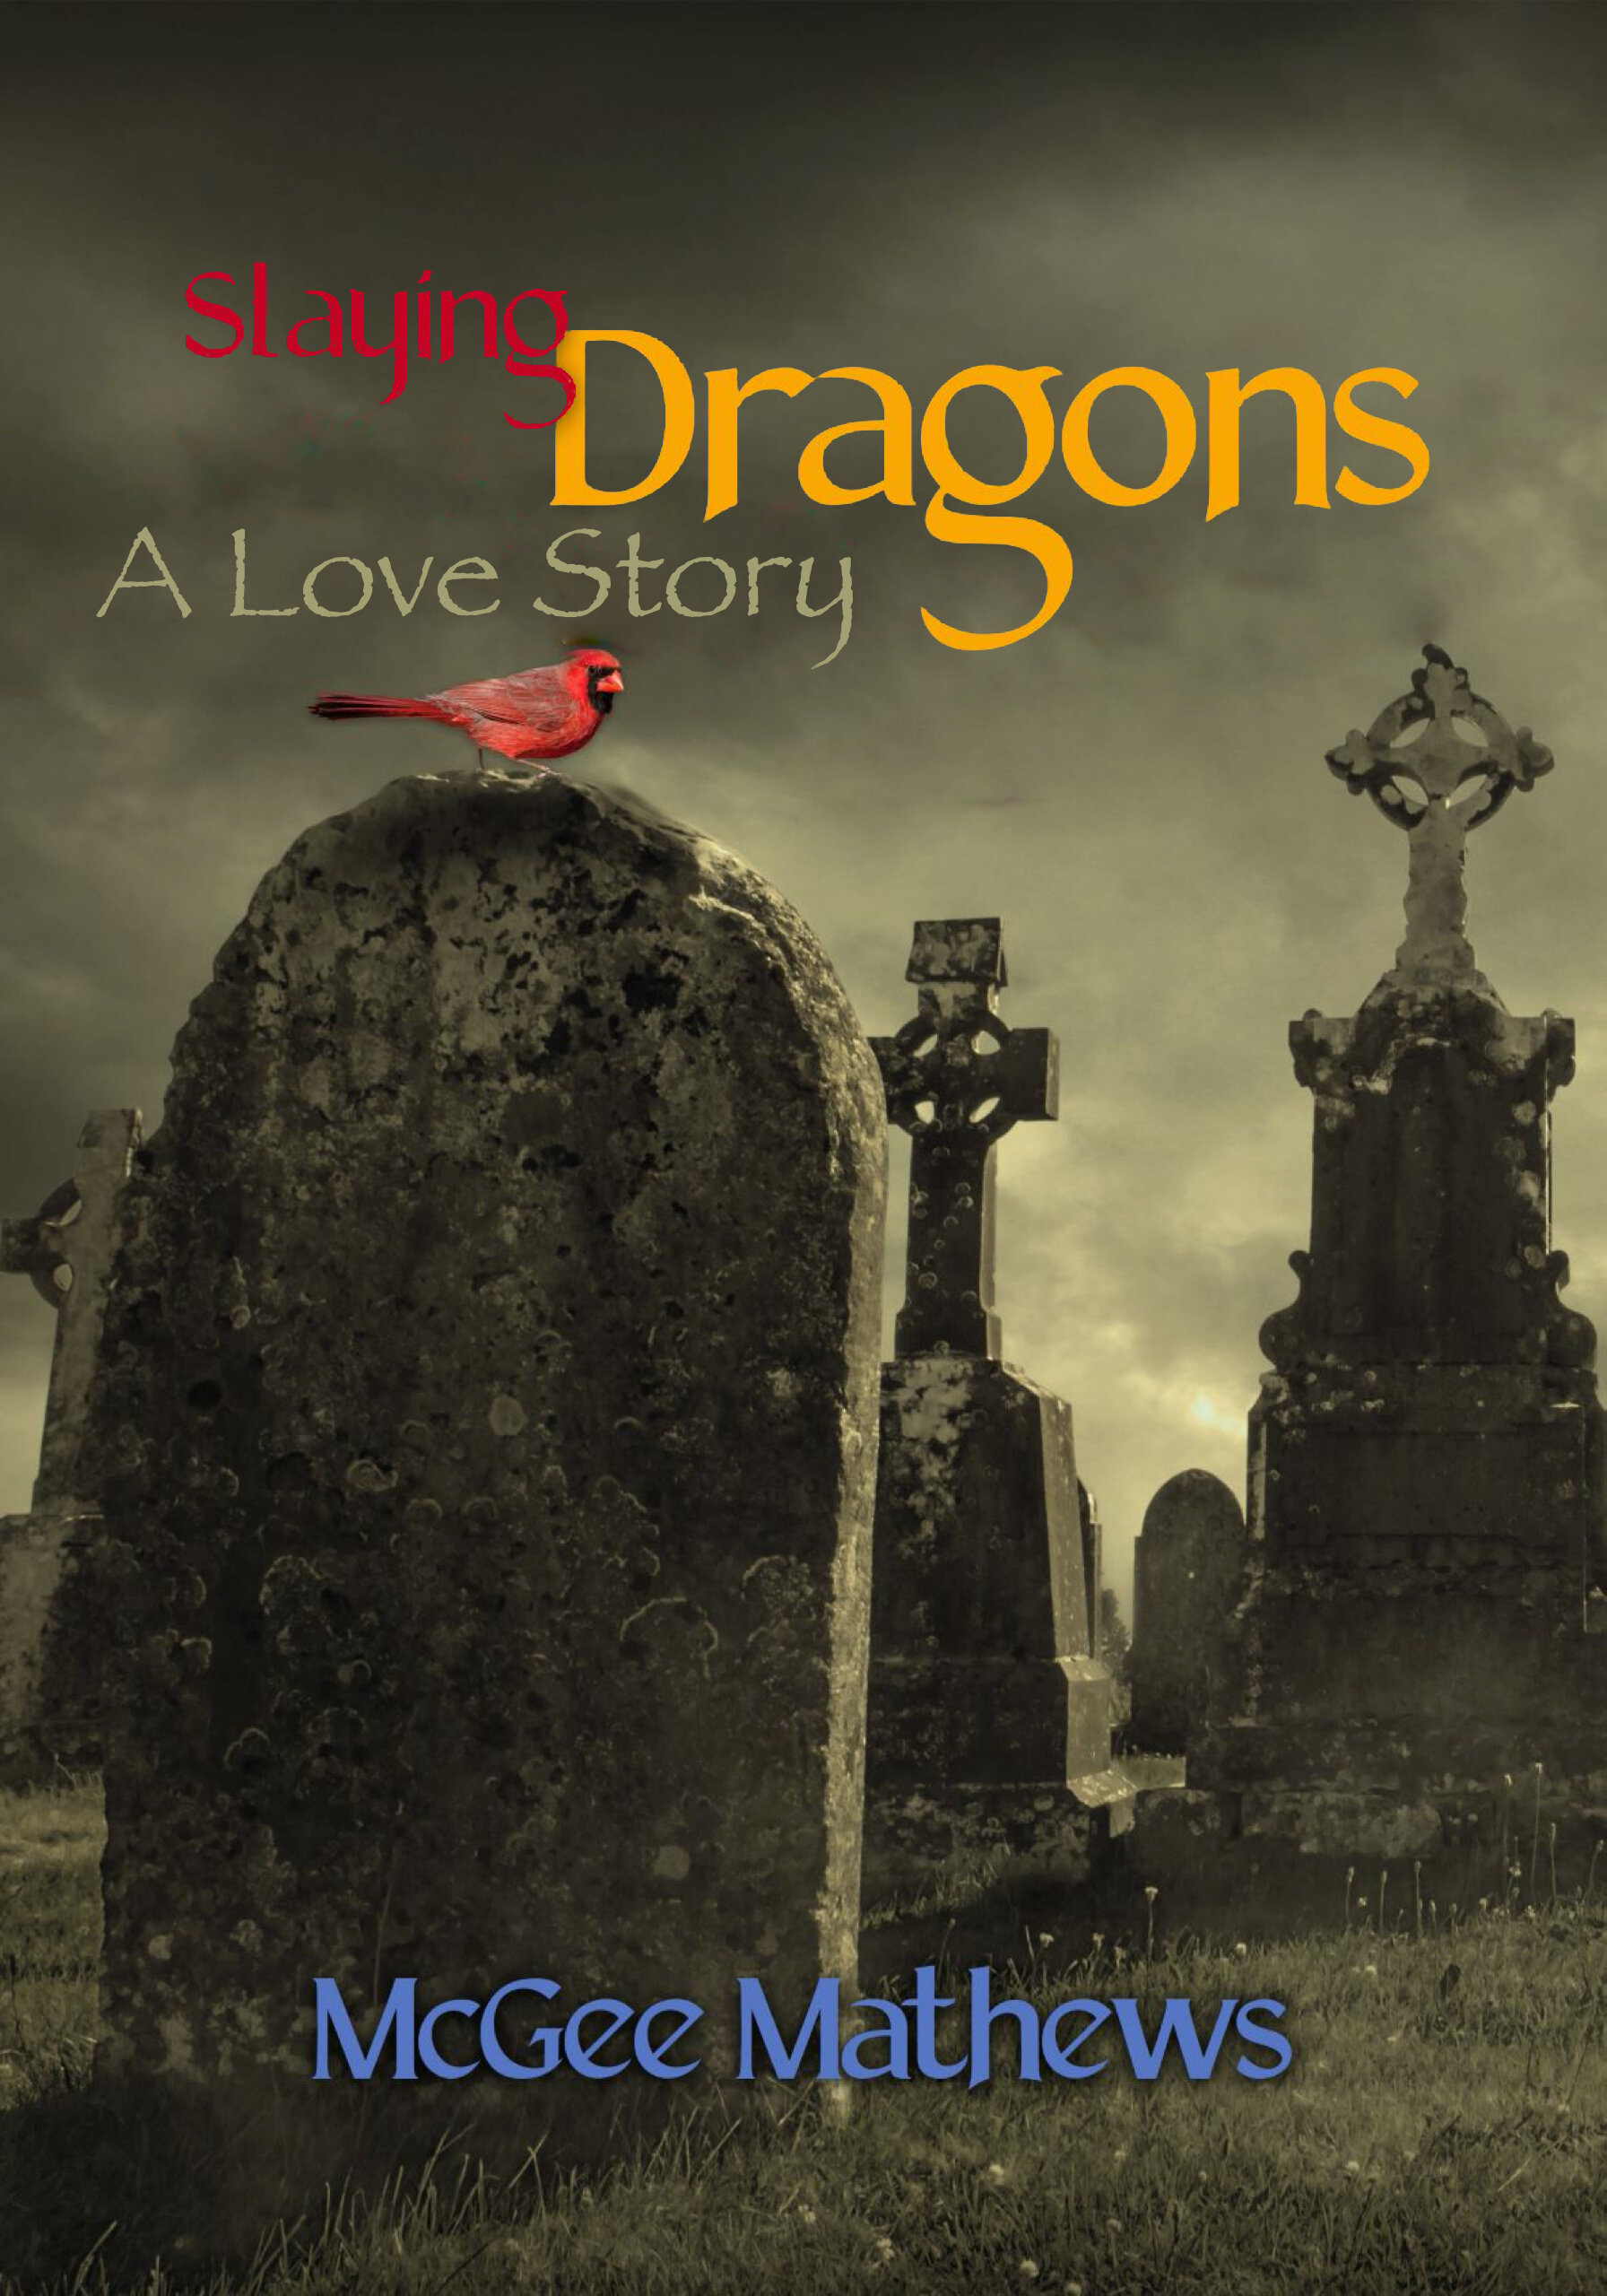 Slaying Dragons by McGee Mathews